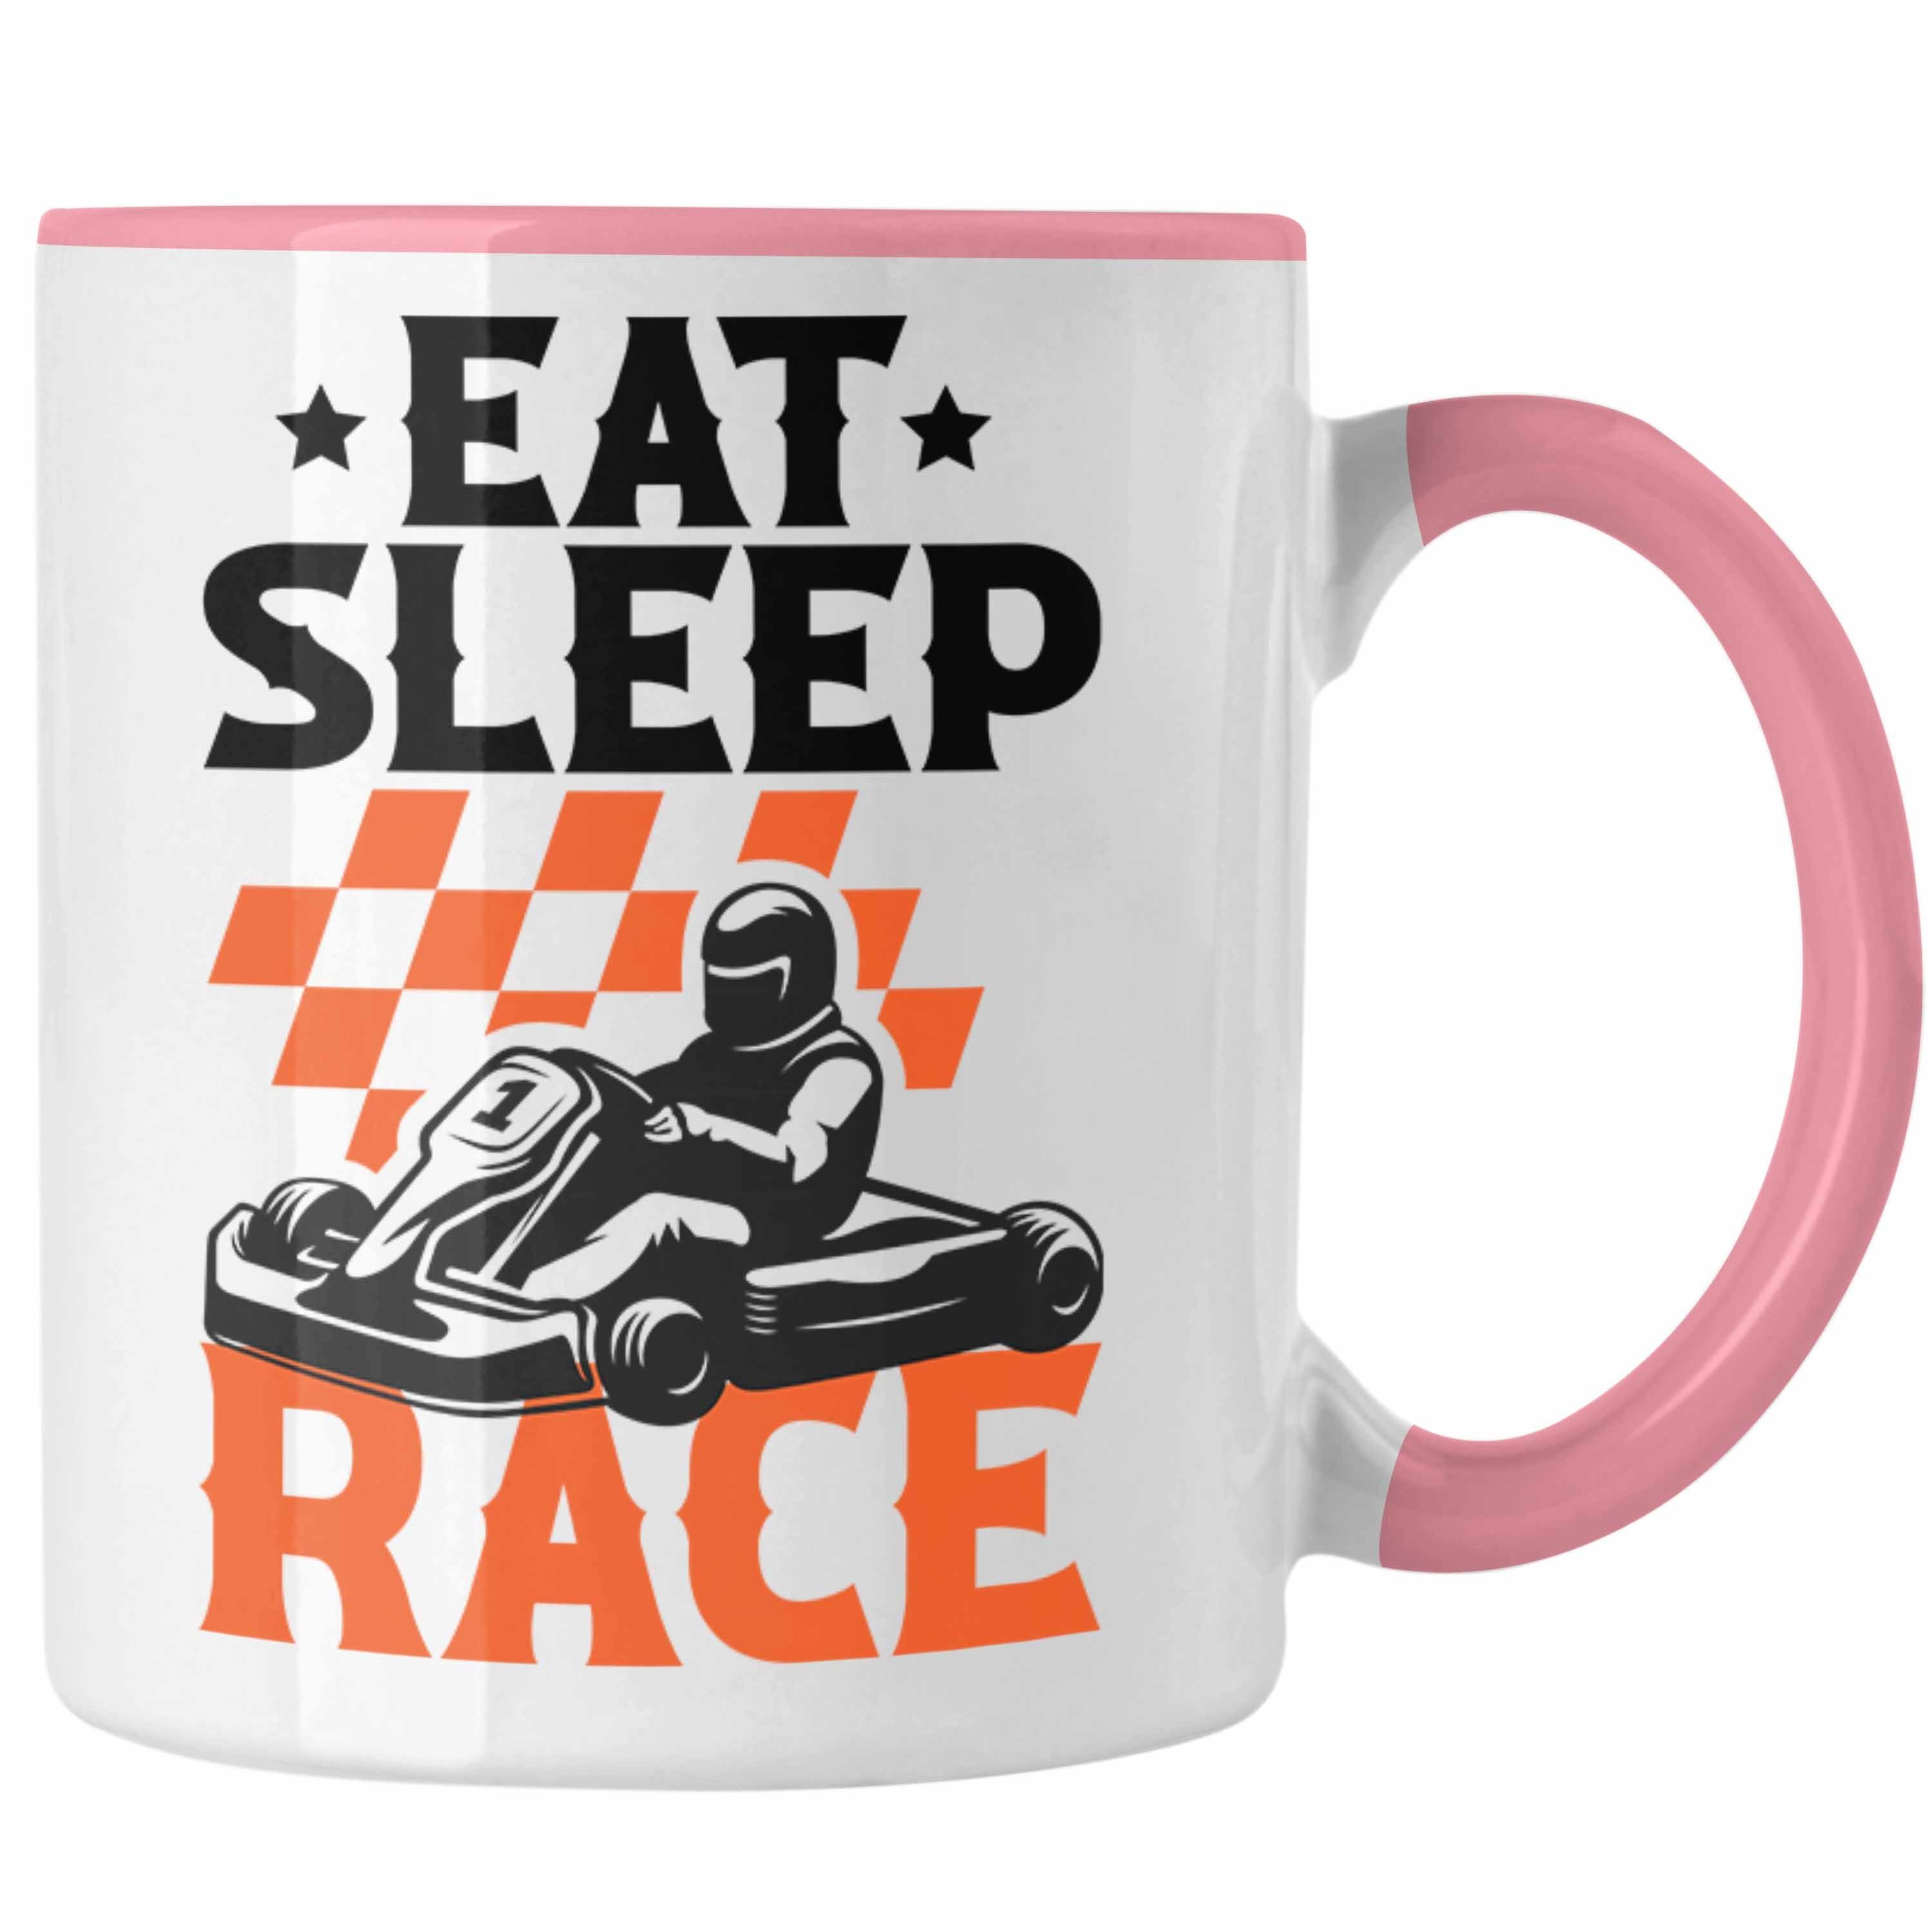 Trendation Tasse Trendation - Go Kart Fahrer Tasse Geschenk Eat Sleep Race Gokart Racing Rennfahrer Rosa